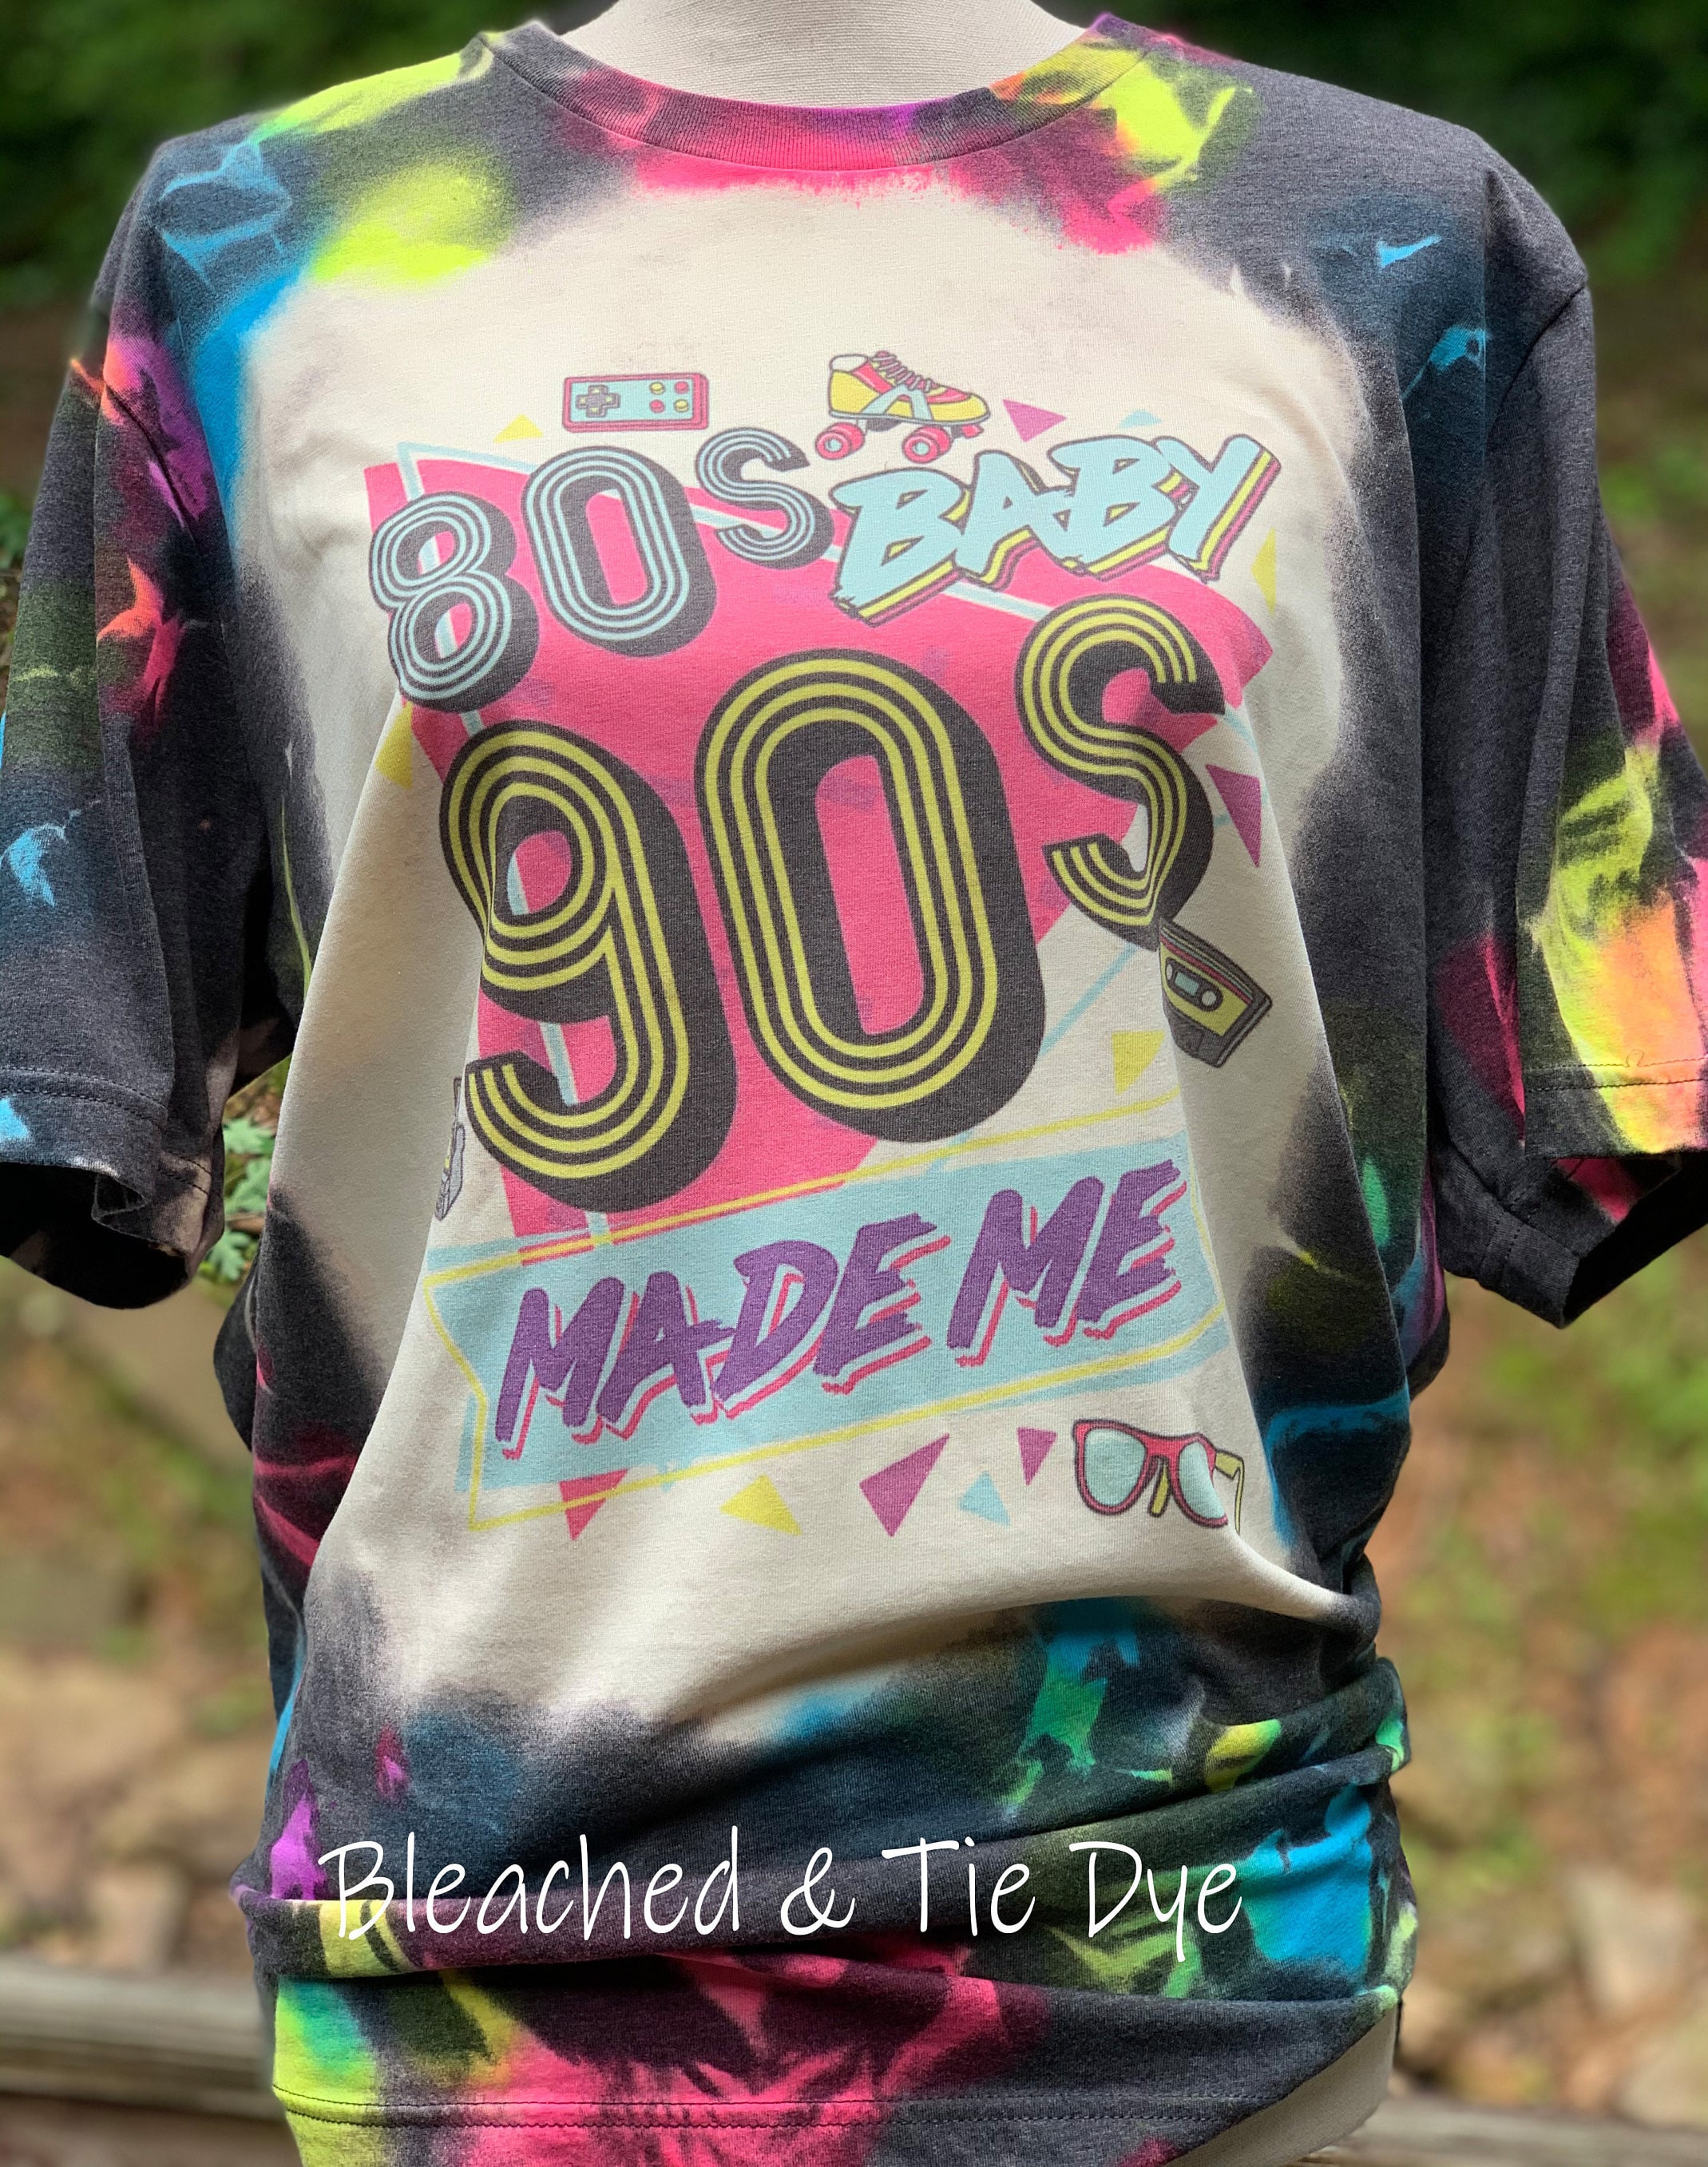 Retro Sunset 70's 80's 90'T-Shirt Design